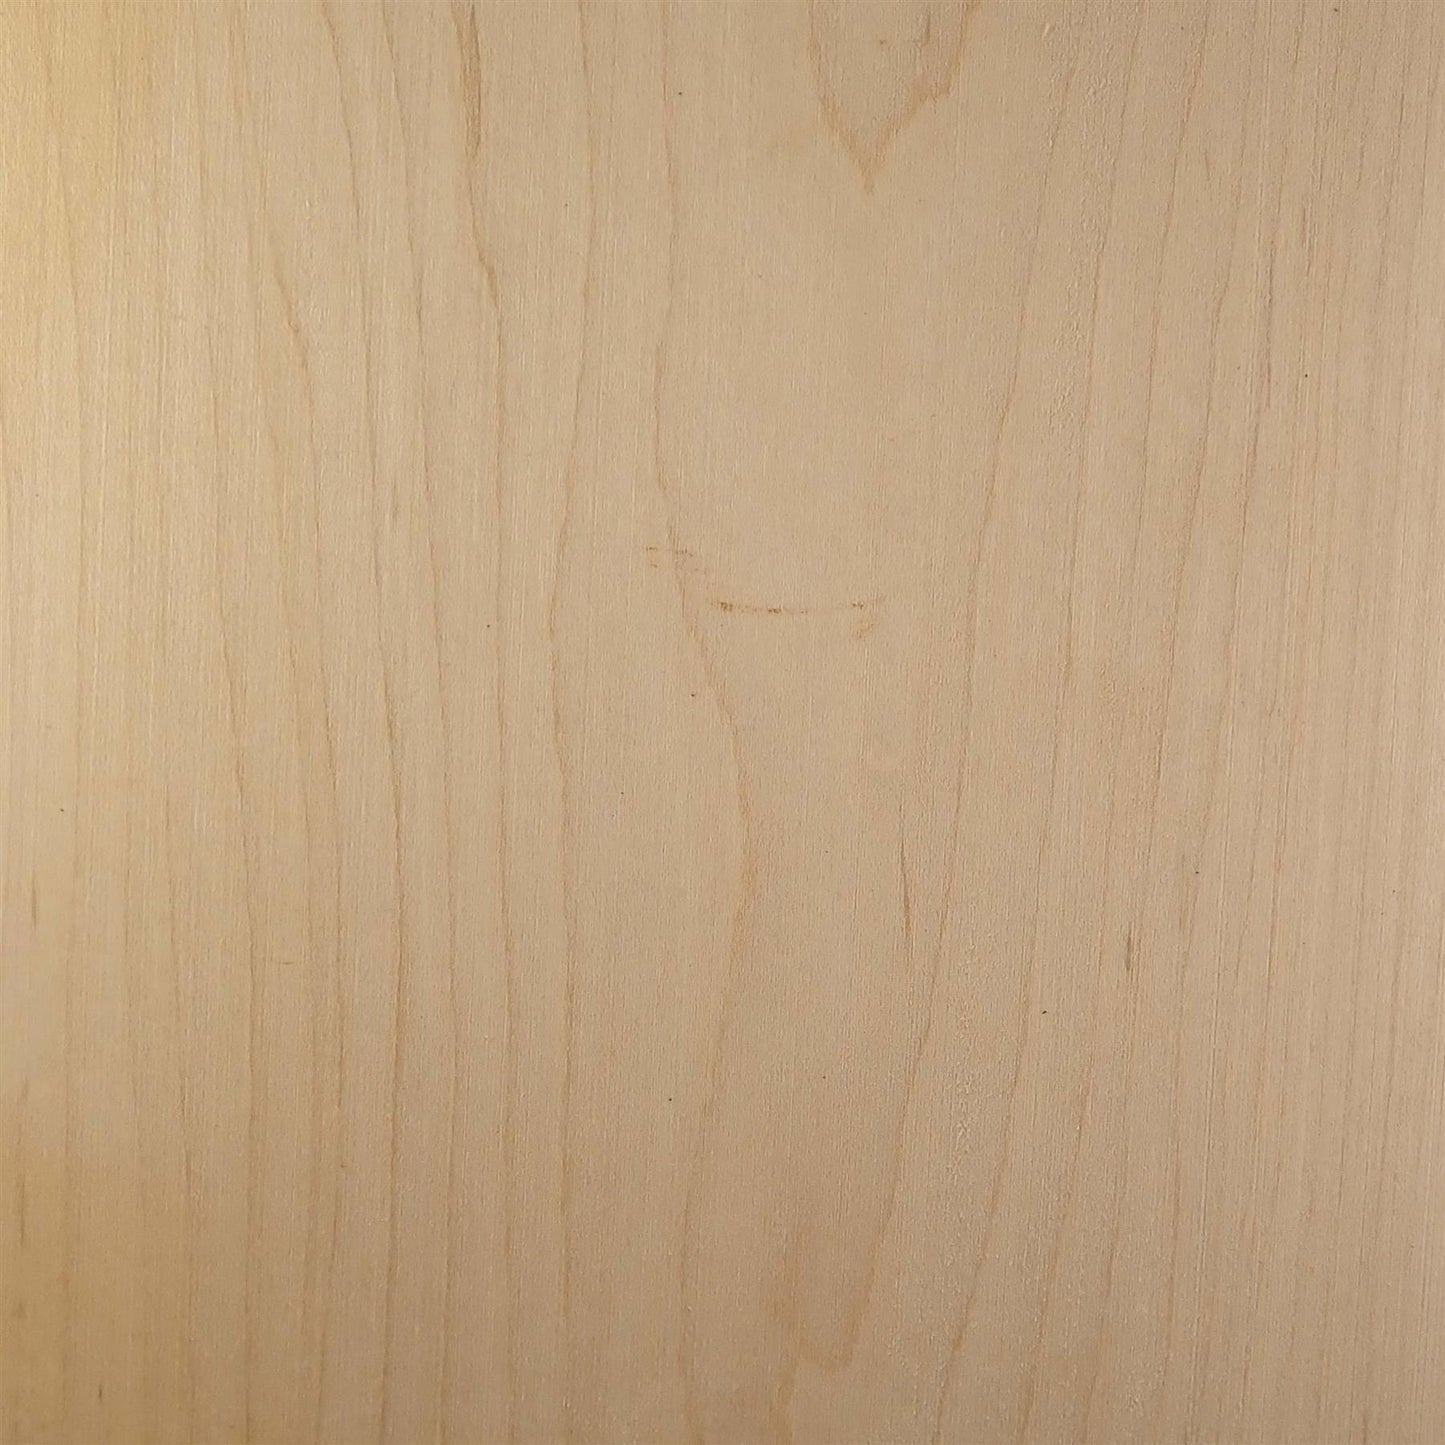 Luthitec Maple Wood Finish Sampler Board - 150x150x4mm (5.9x5.91x0.16")